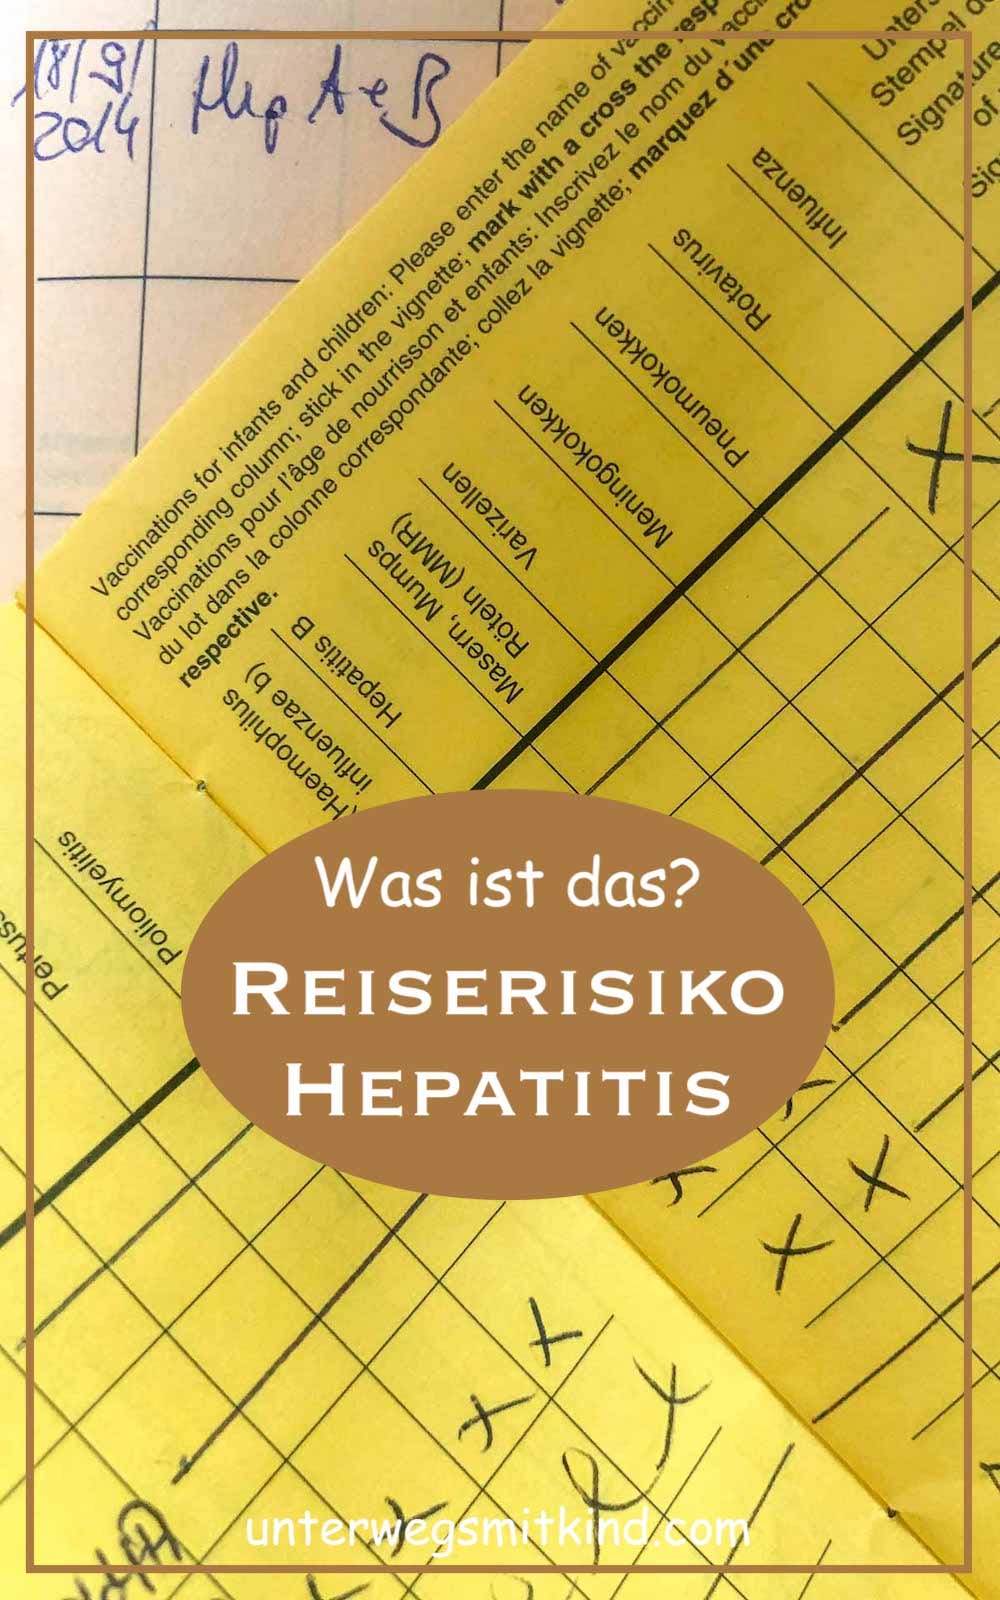 Impfbuch-Hepatitis-Impfung-Pin